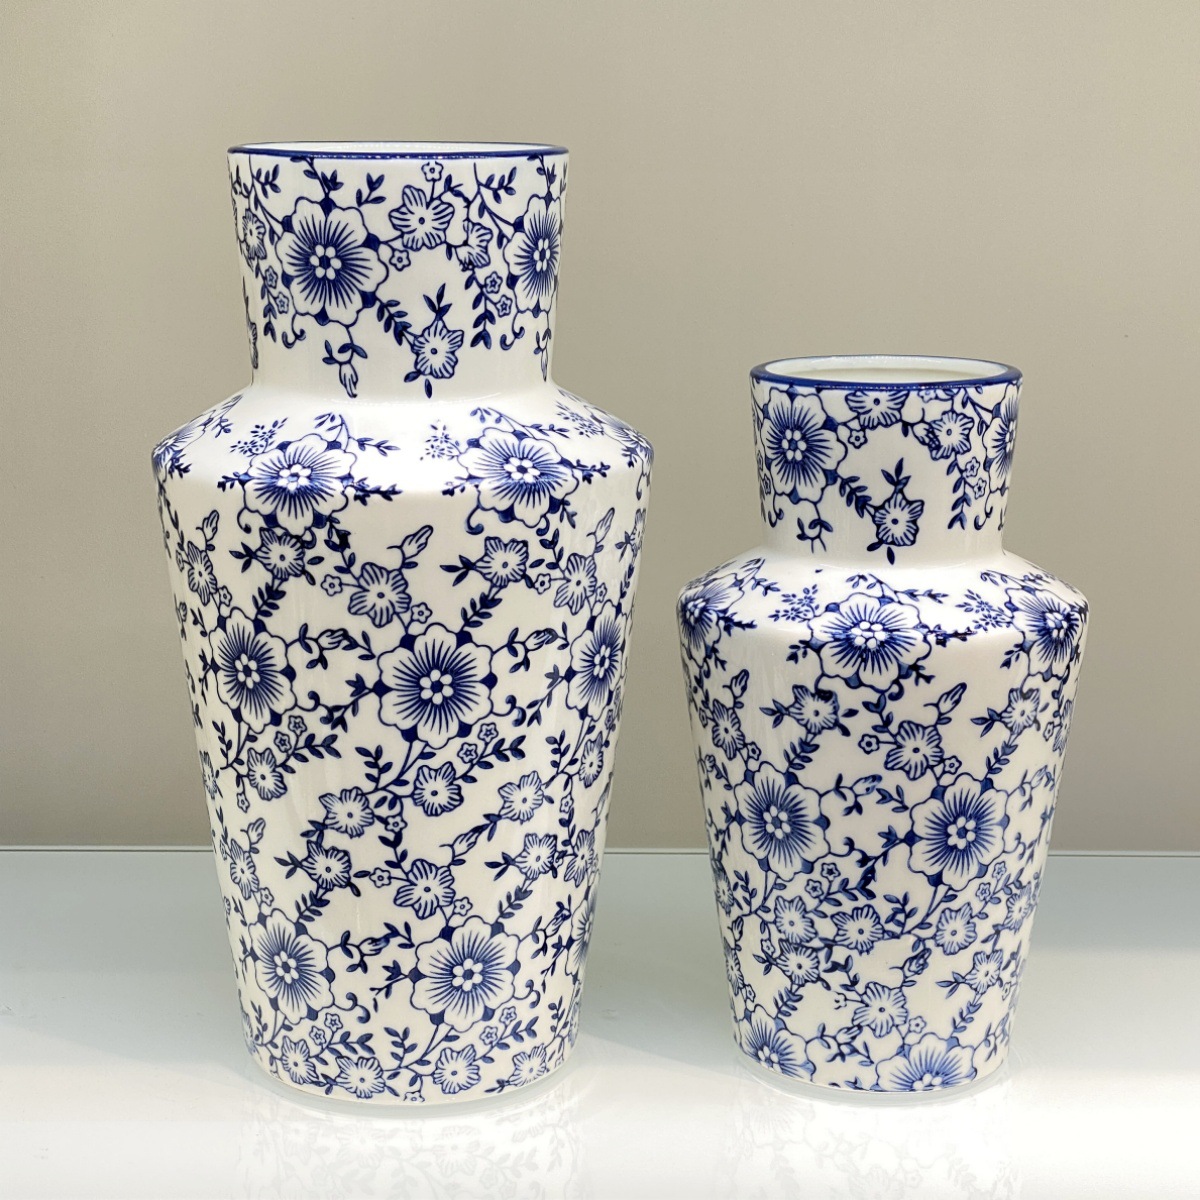 new chinese ceramic vase blue and white creative vintage dried flower arrangement vessel living room entrance decoration